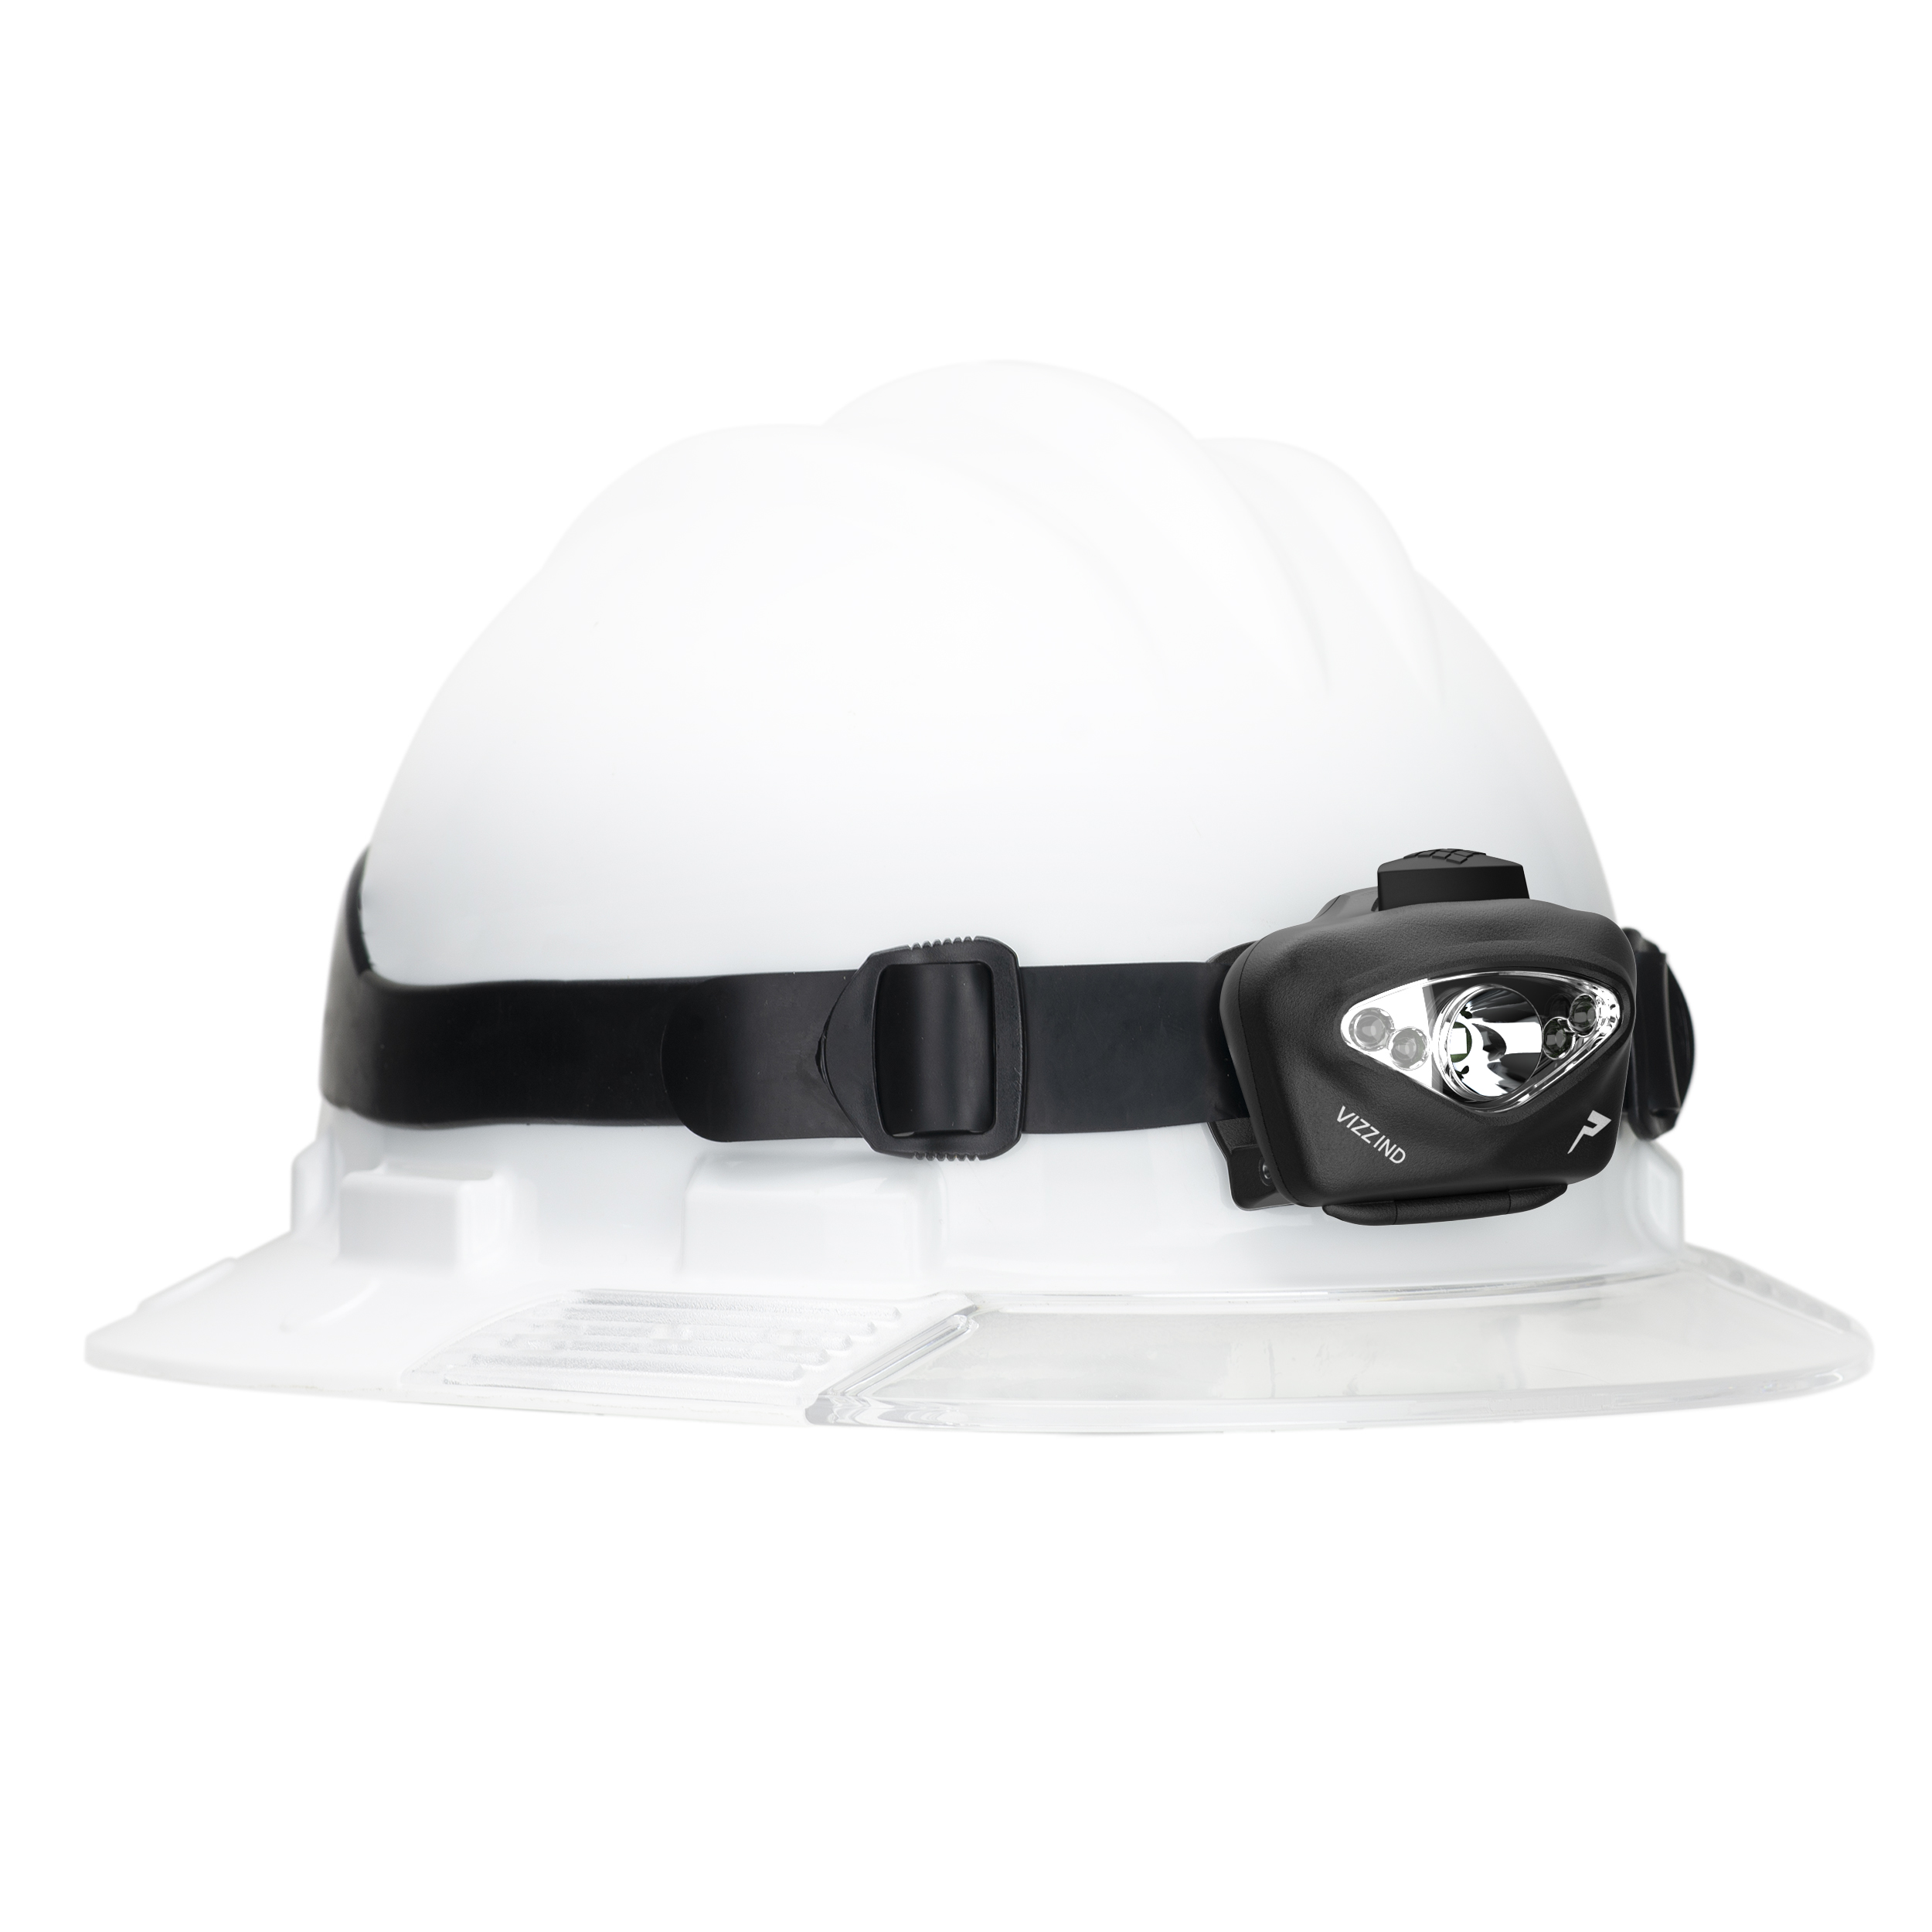 HEADLAMP INDUSTRIAL HI- VIZZ - Professional Series Headlamps